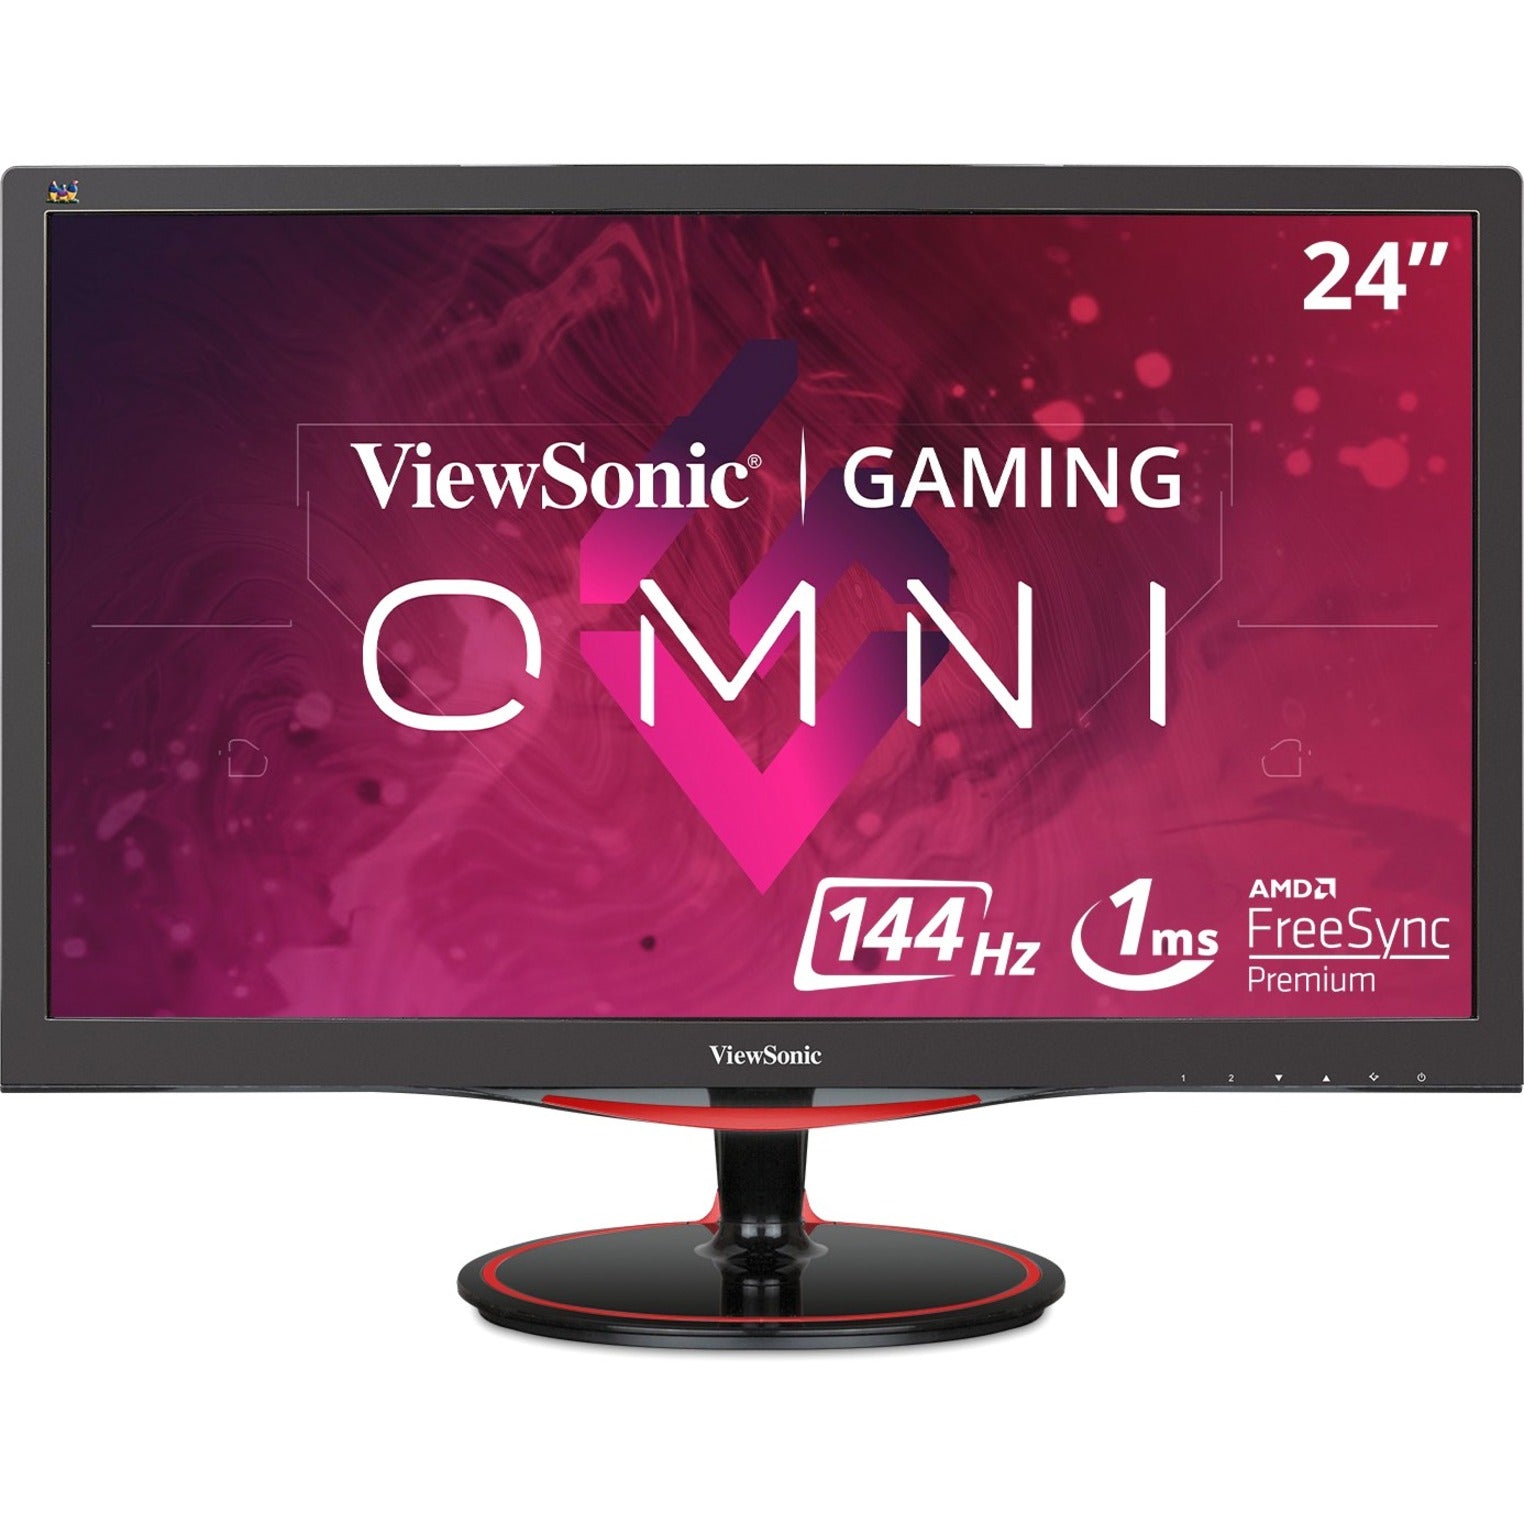 ViewSonic VX2458-MHD Gaming Monitor, 24" Full HD, 144Hz, AMD FreeSync, Black Red